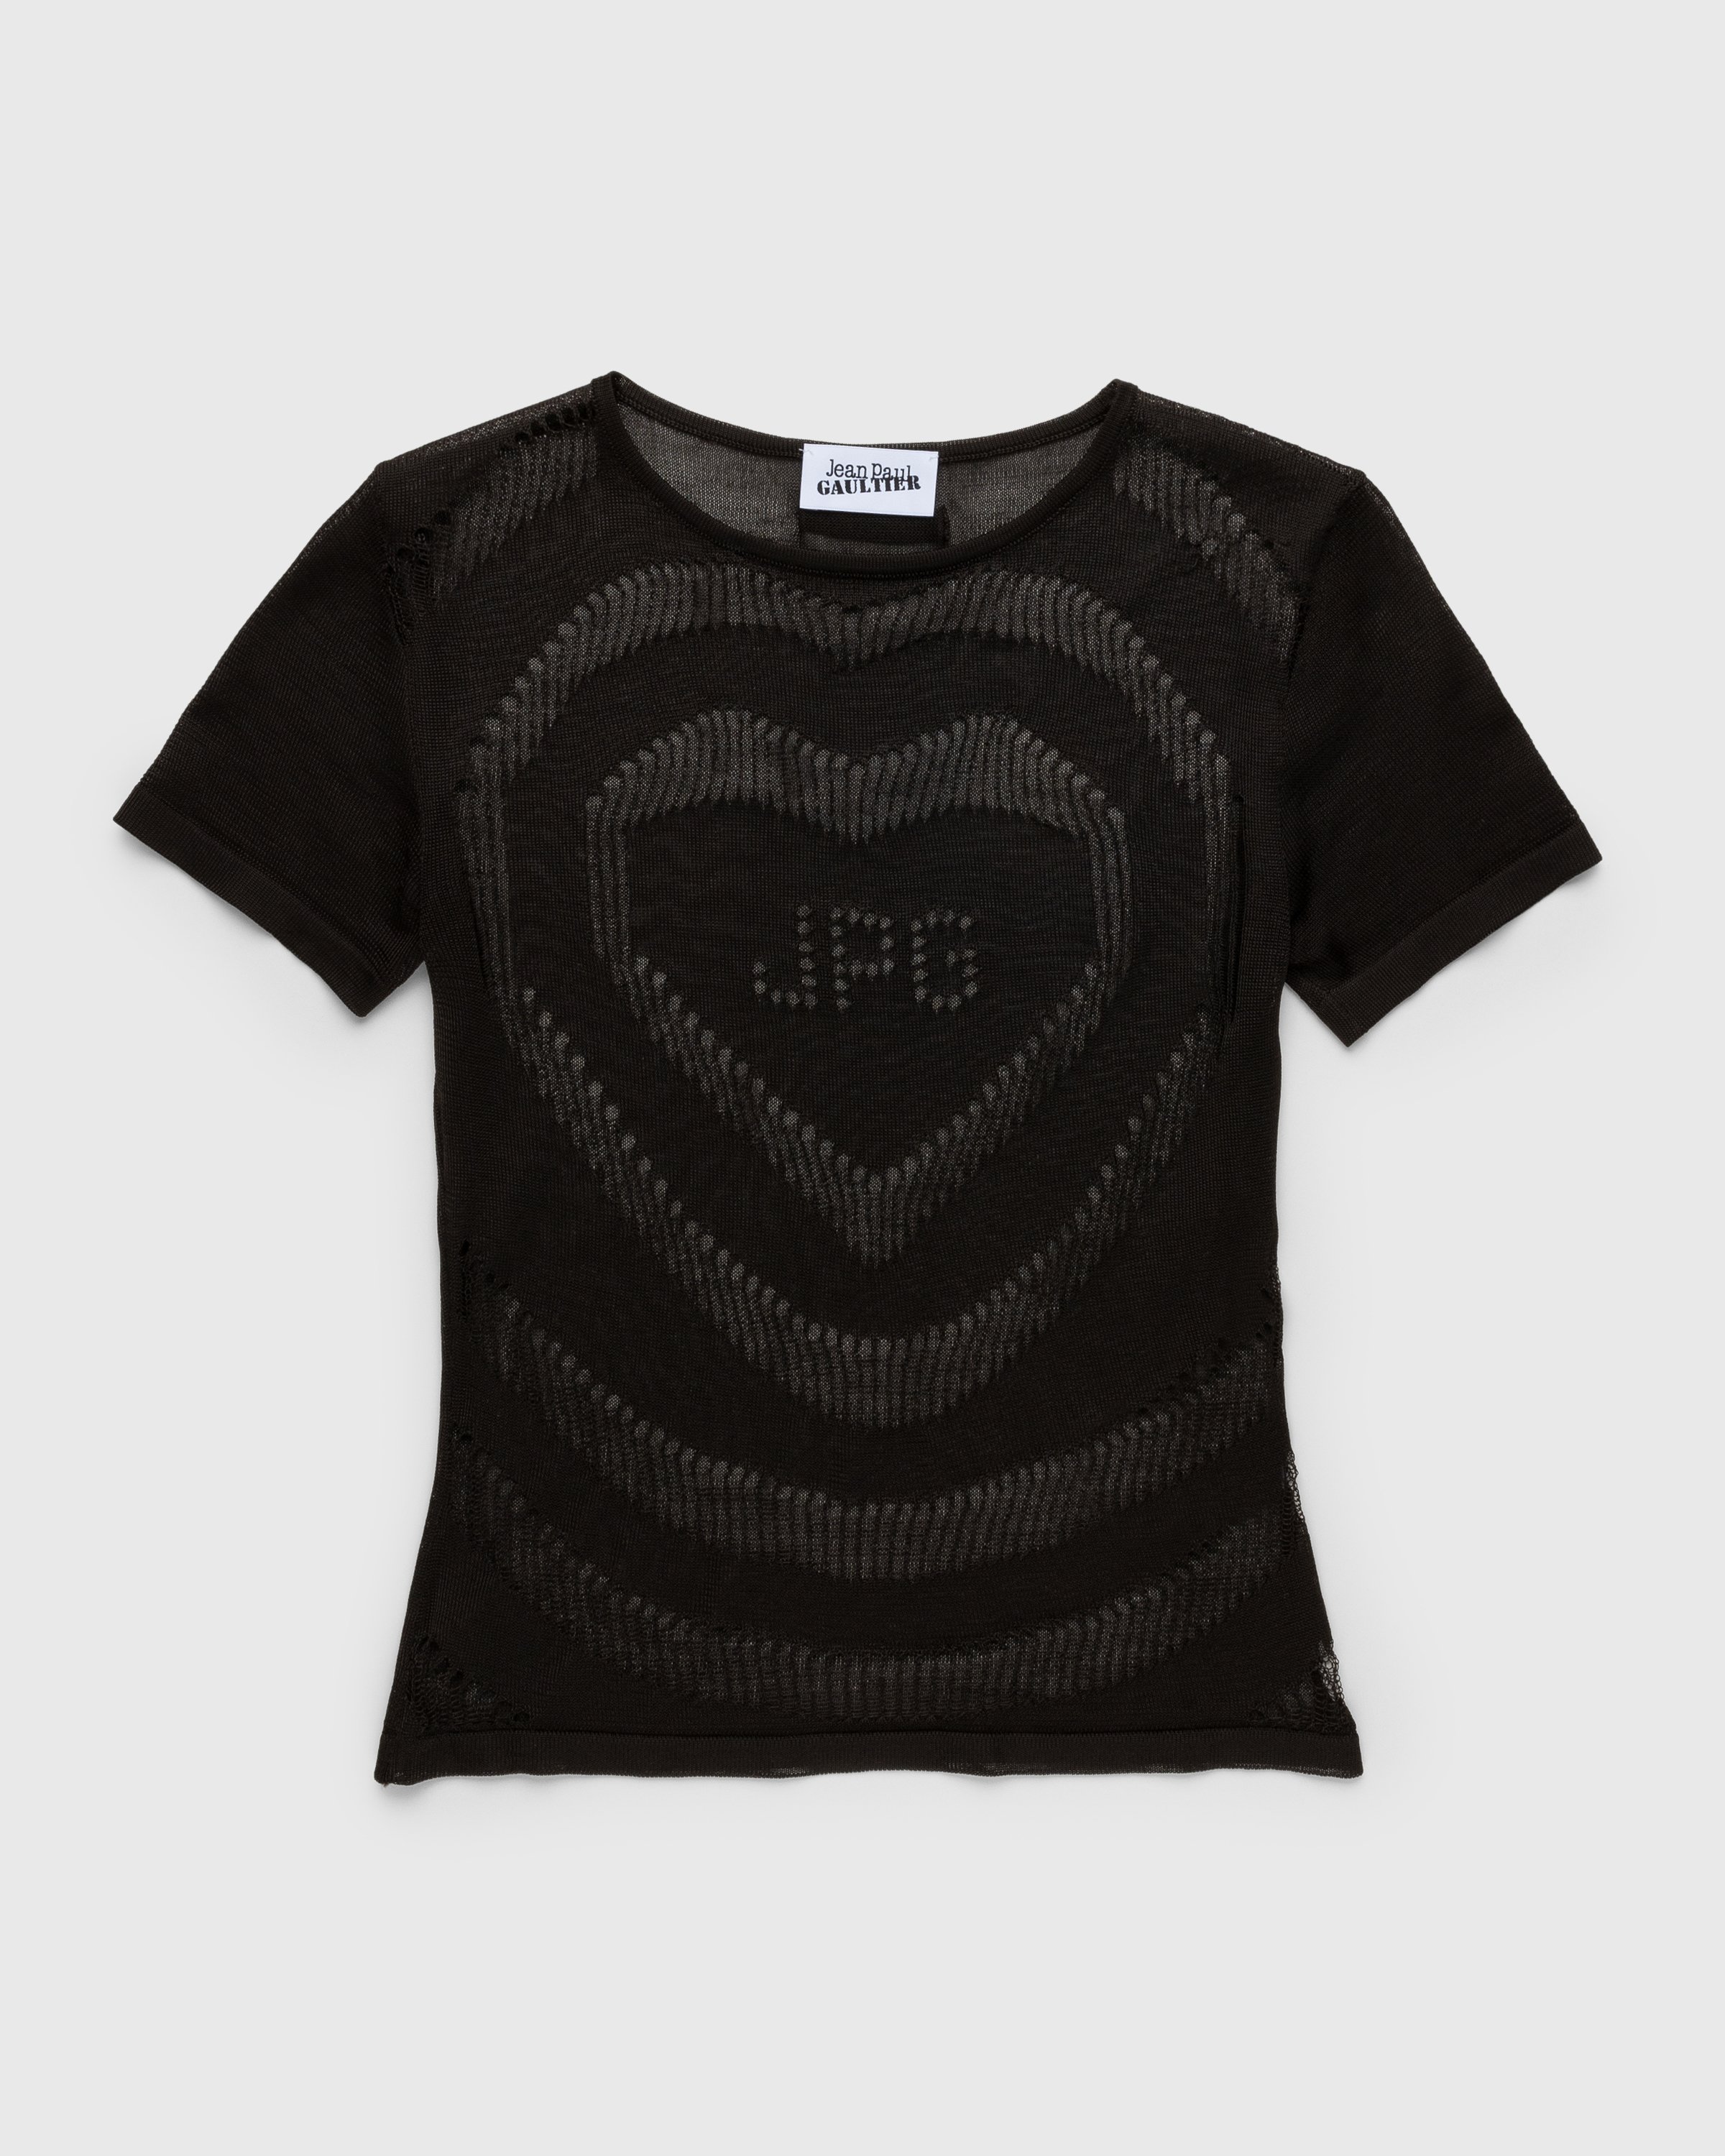 Jean Paul Gaultier - Open-Worked JPG Heart T-Shirt Dark Brown - Clothing - Brown - Image 1